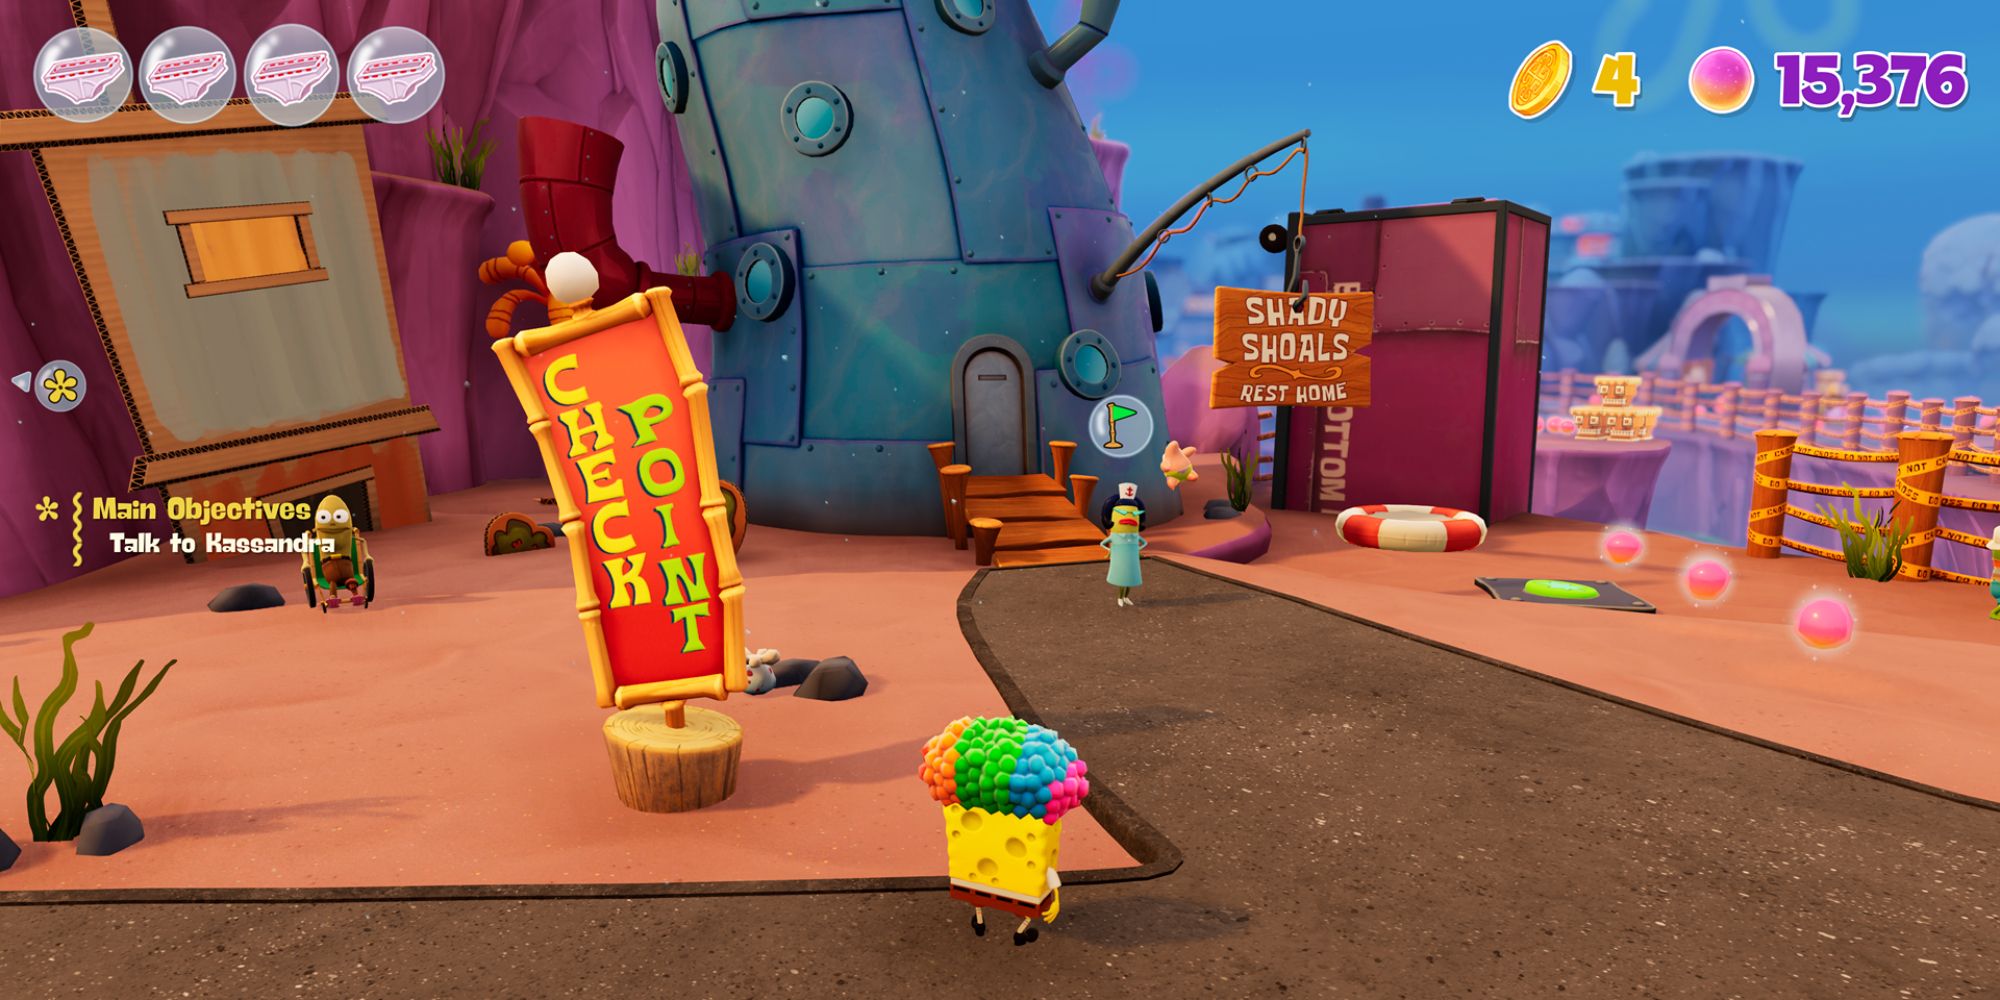 SpongeBob Cosmic Shake Screenshot Of Shady Shoals Rest Home